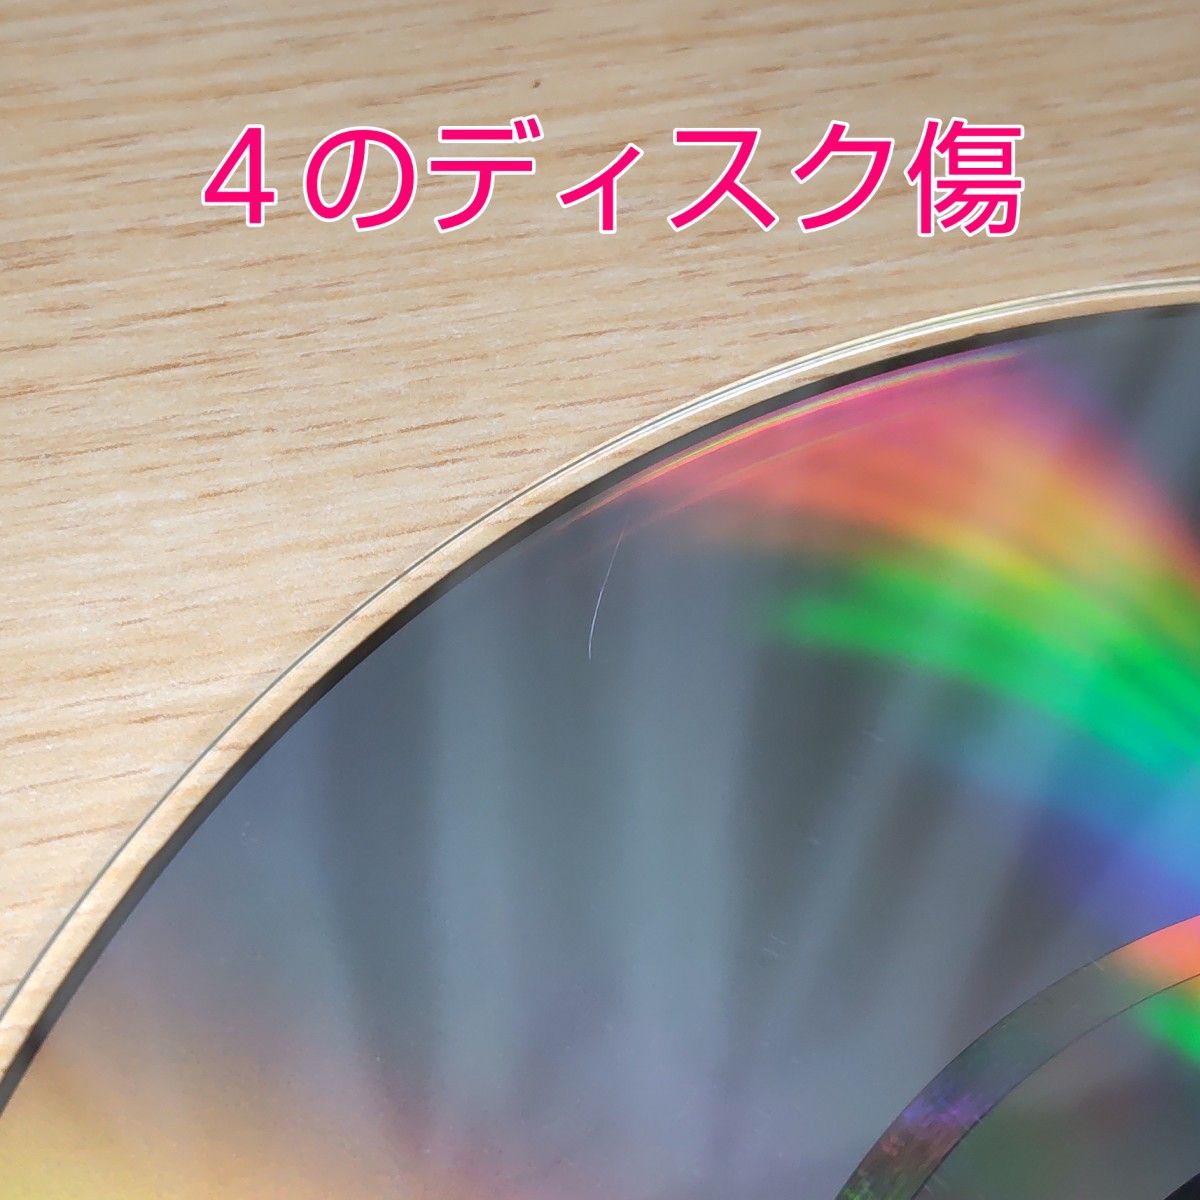 【DC】 ポップンミュージック 1 2 3 4 セット売り